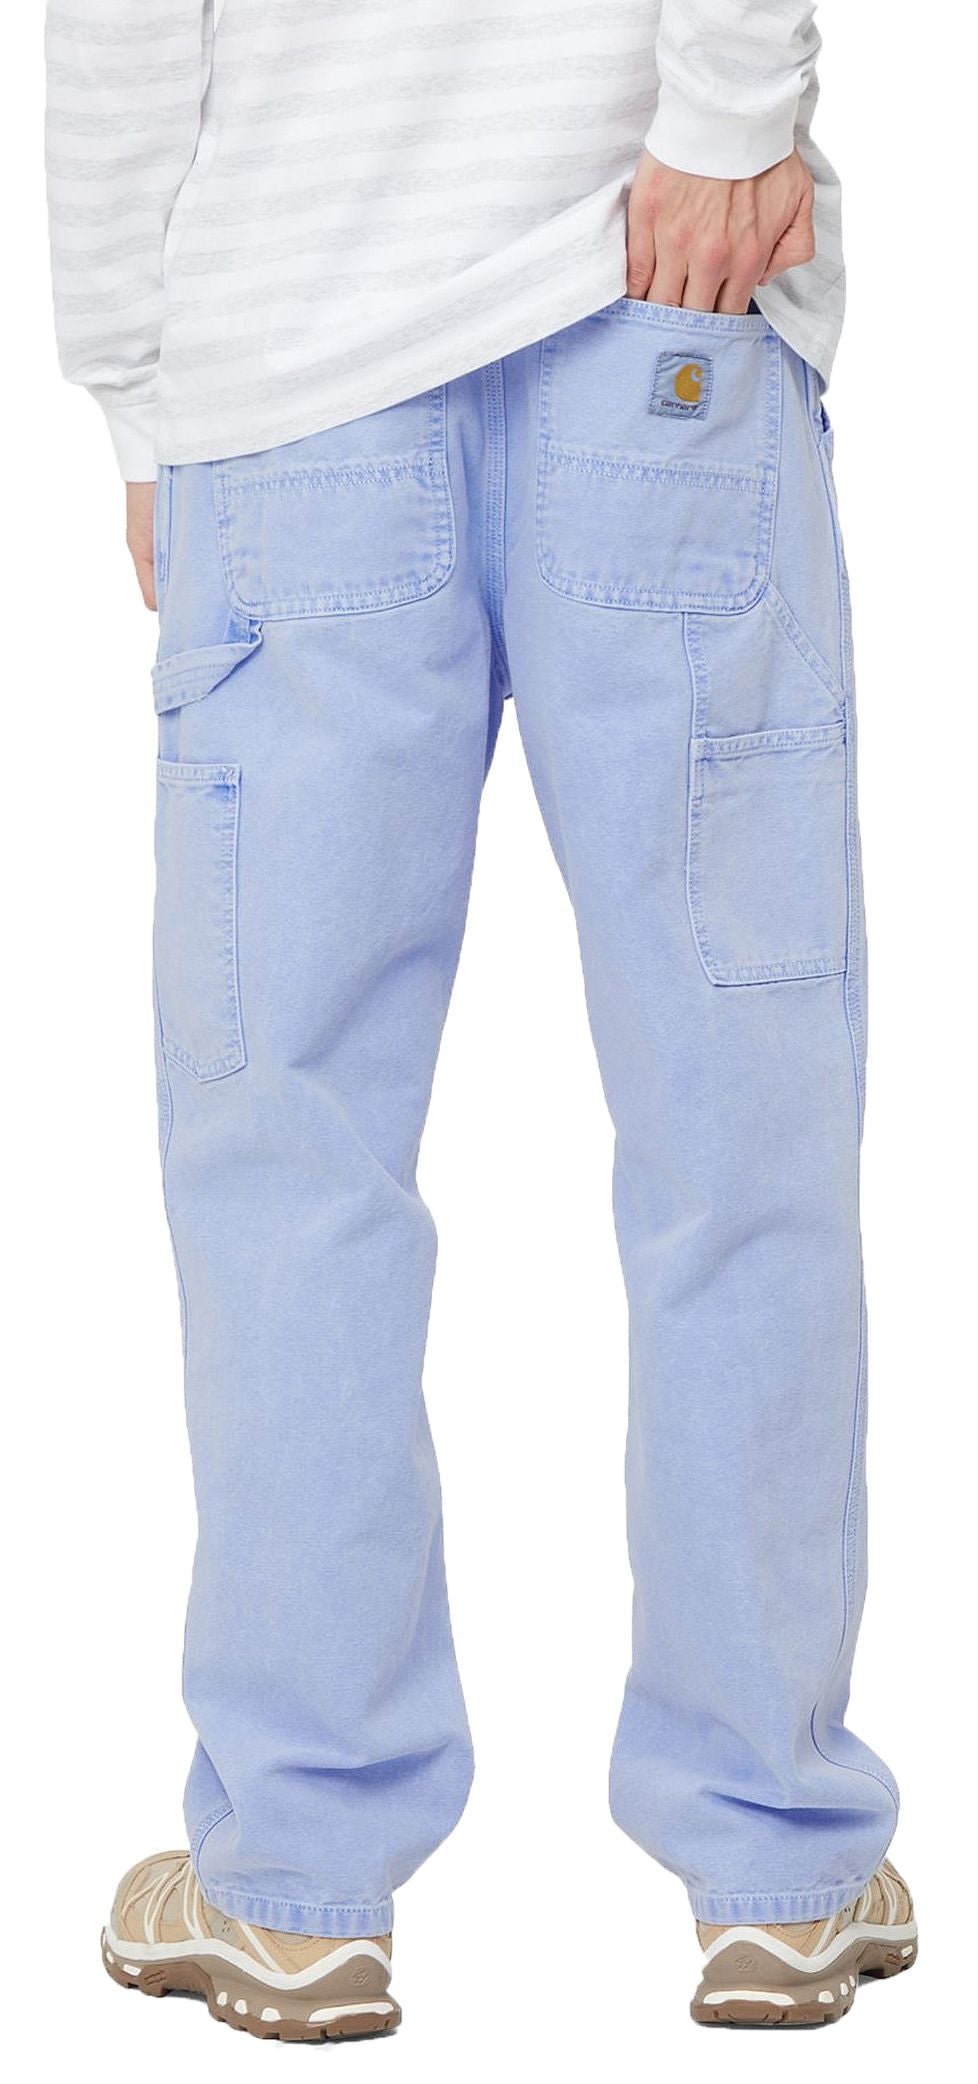  Carhartt Wip Pantaloni Jeans Single Knee Pant Icy Water Faded Uomo - 3